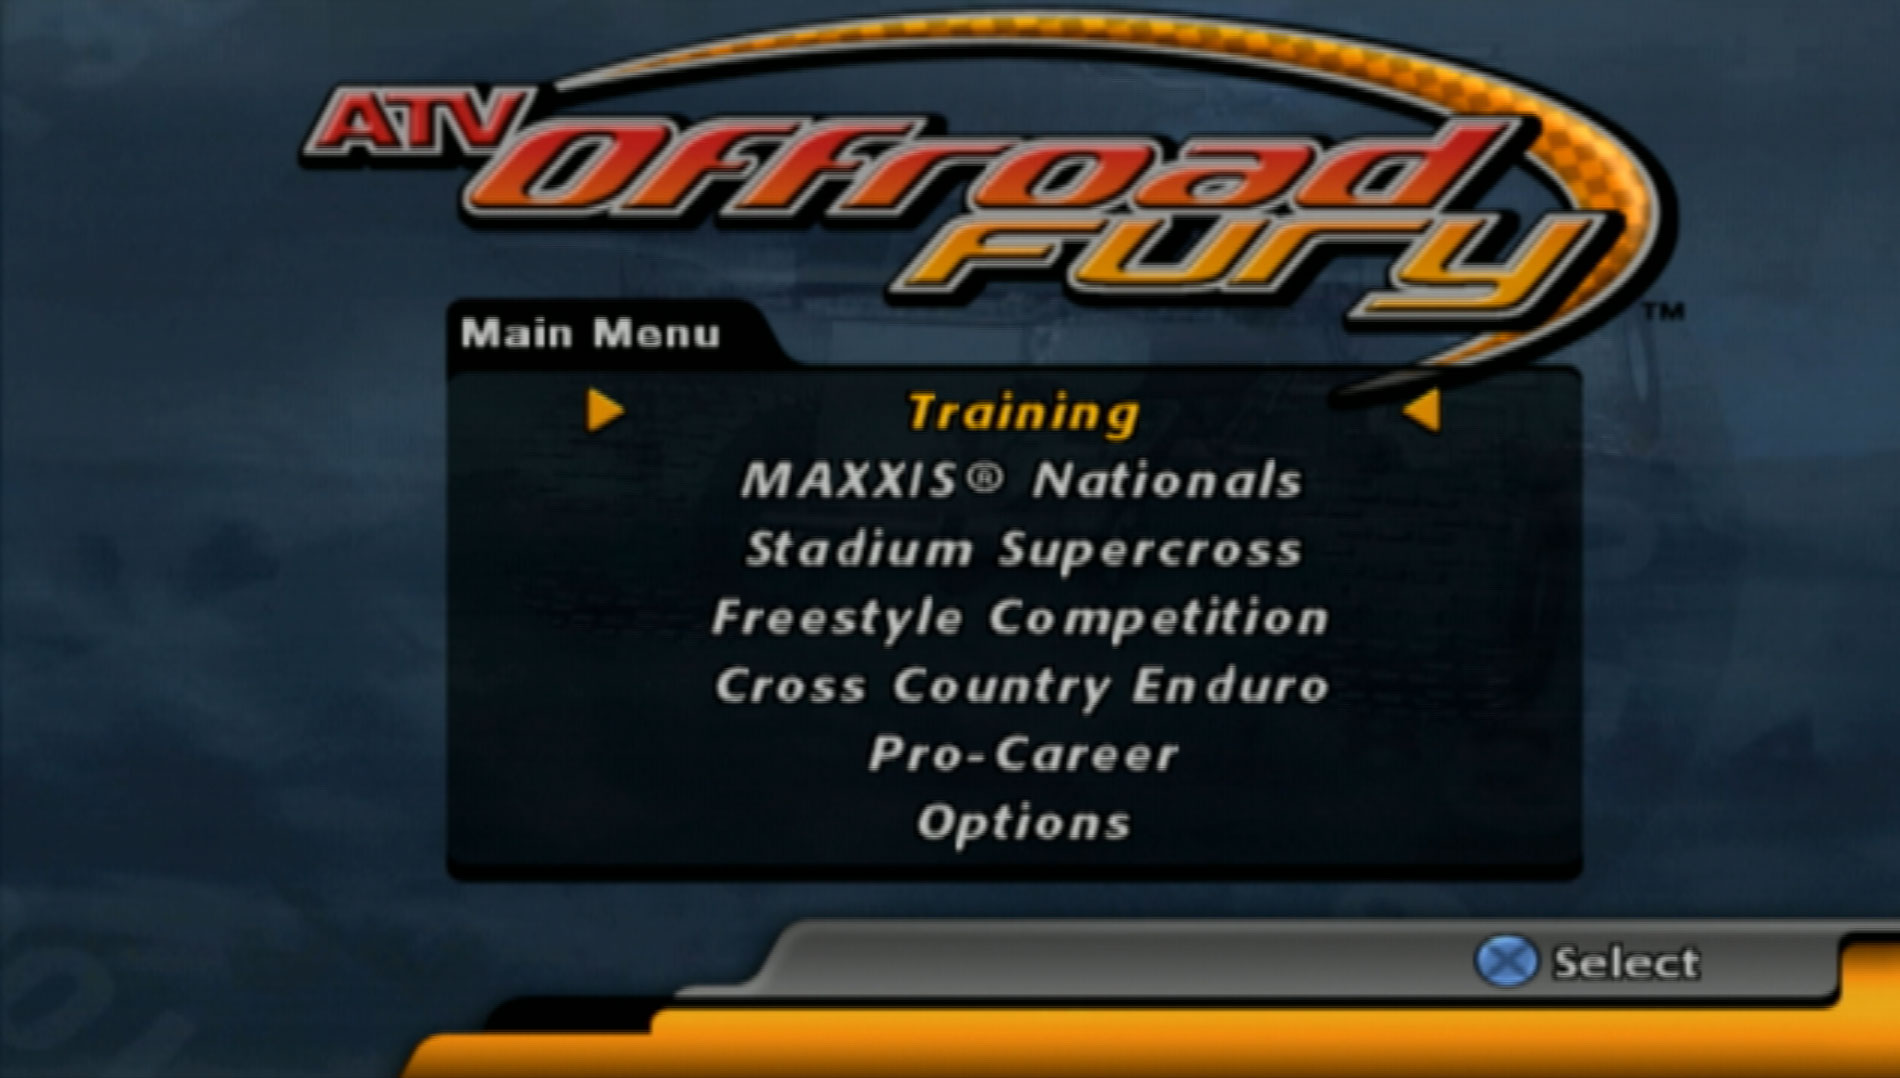 ATV Offroad Fury PS2 main menu